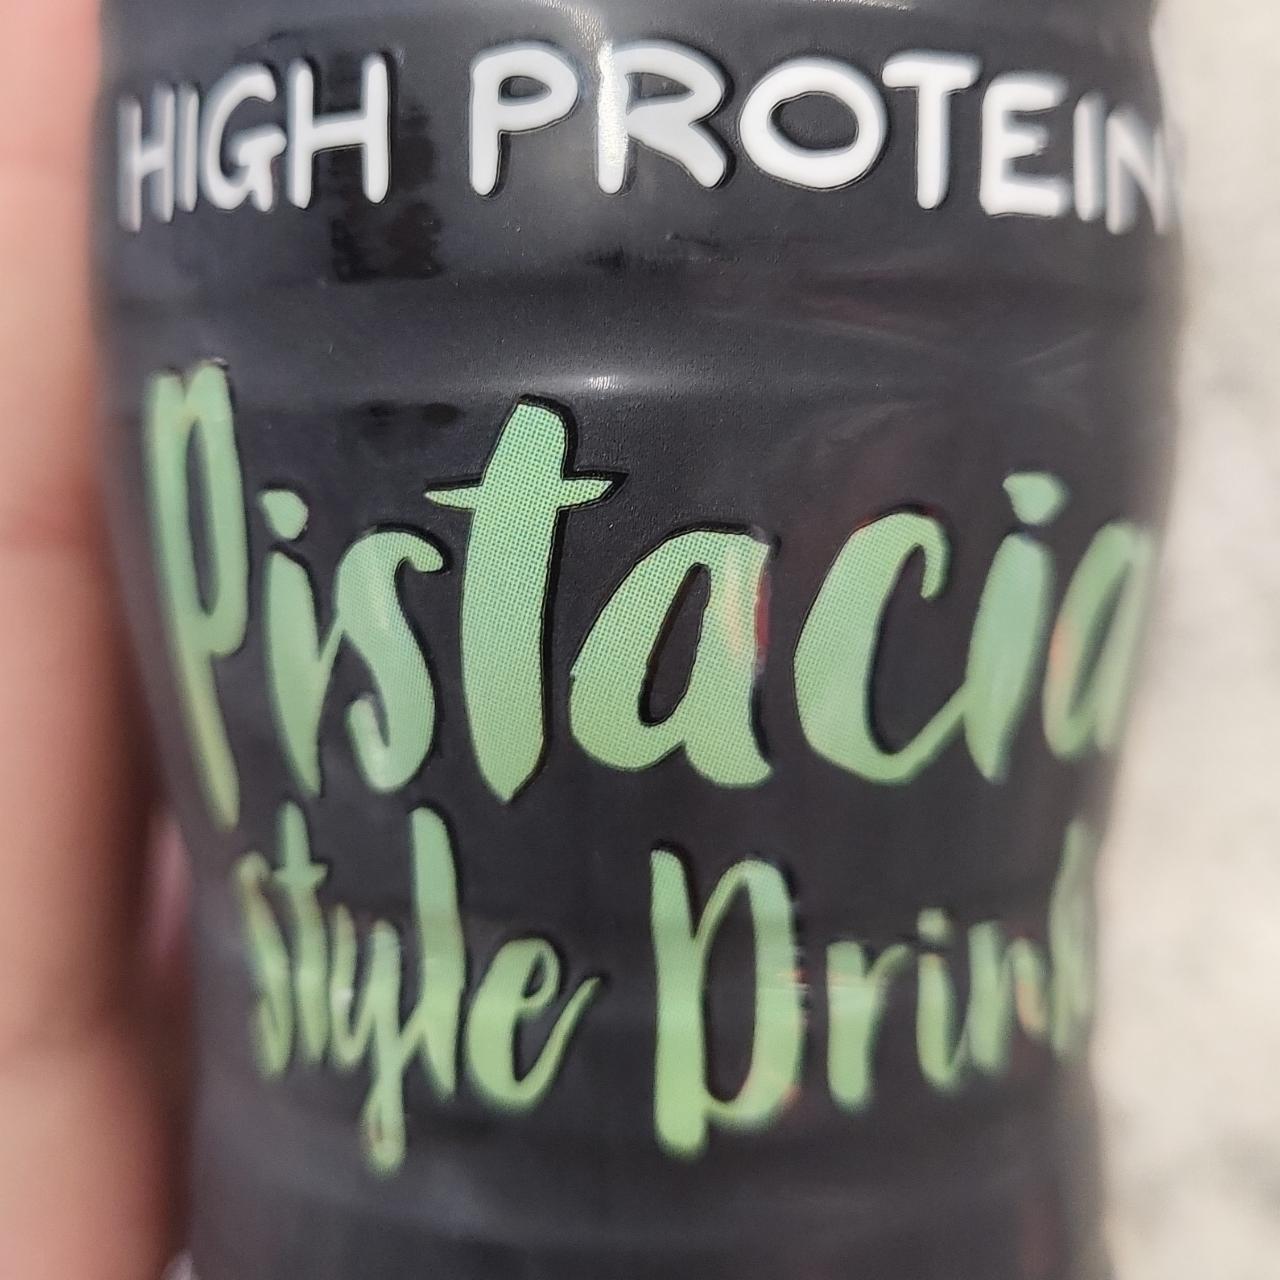 Képek - High protein Pistacia drink Ehrmann